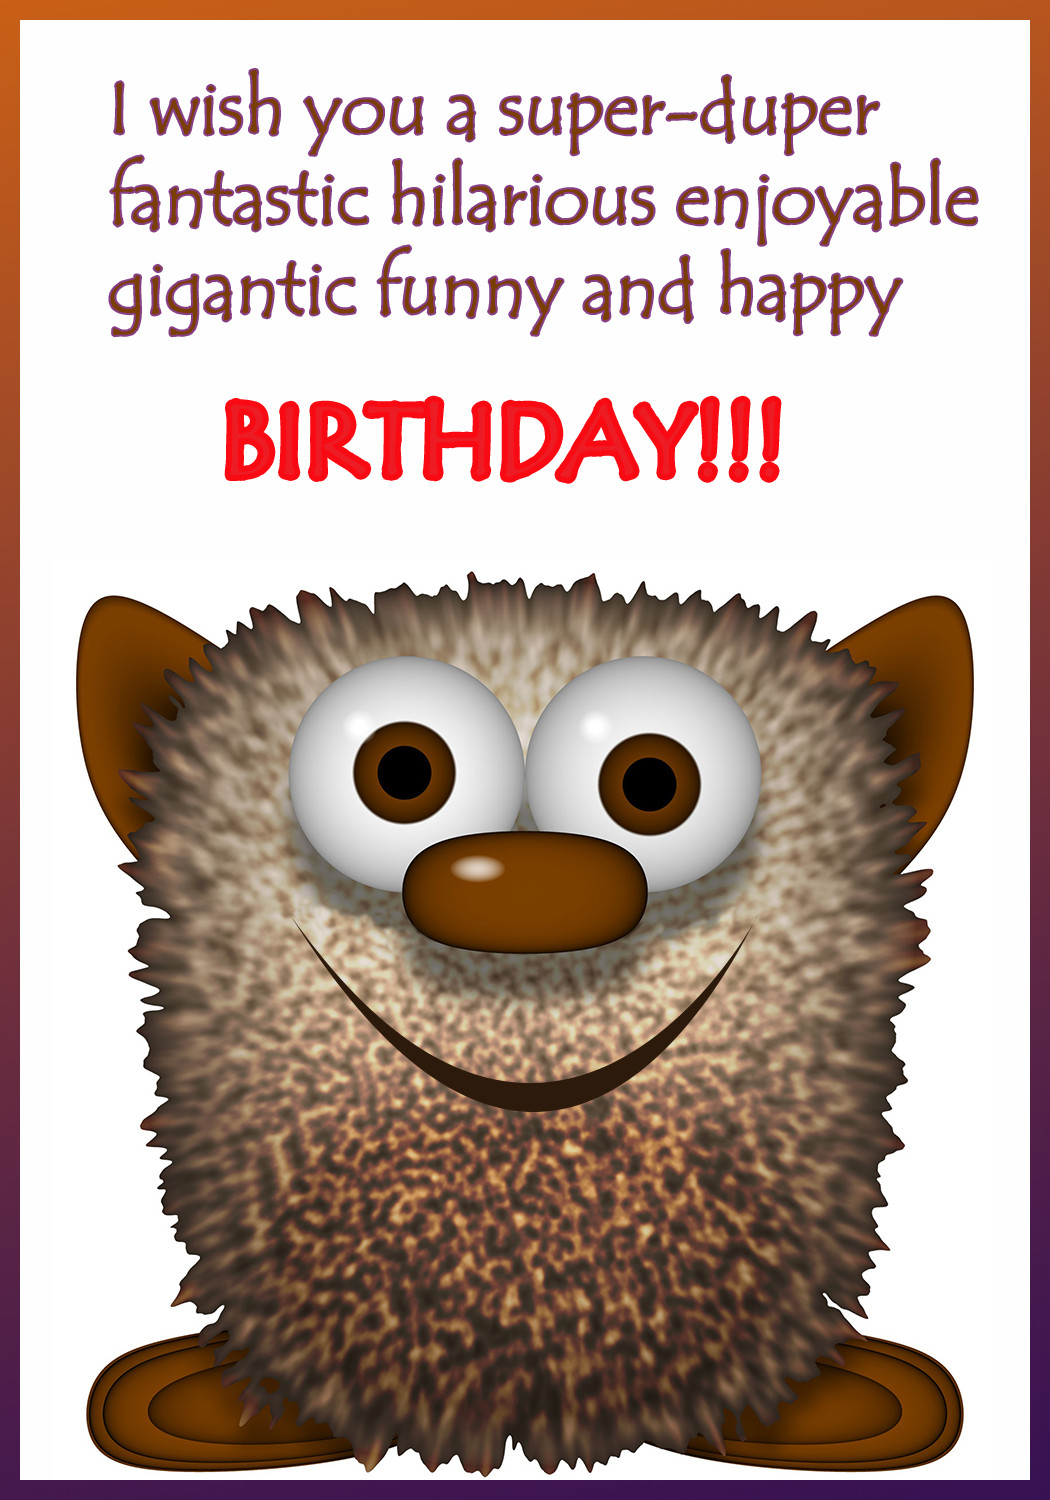 Hilarious Birthday Cards
 Funny Printable Birthday Cards